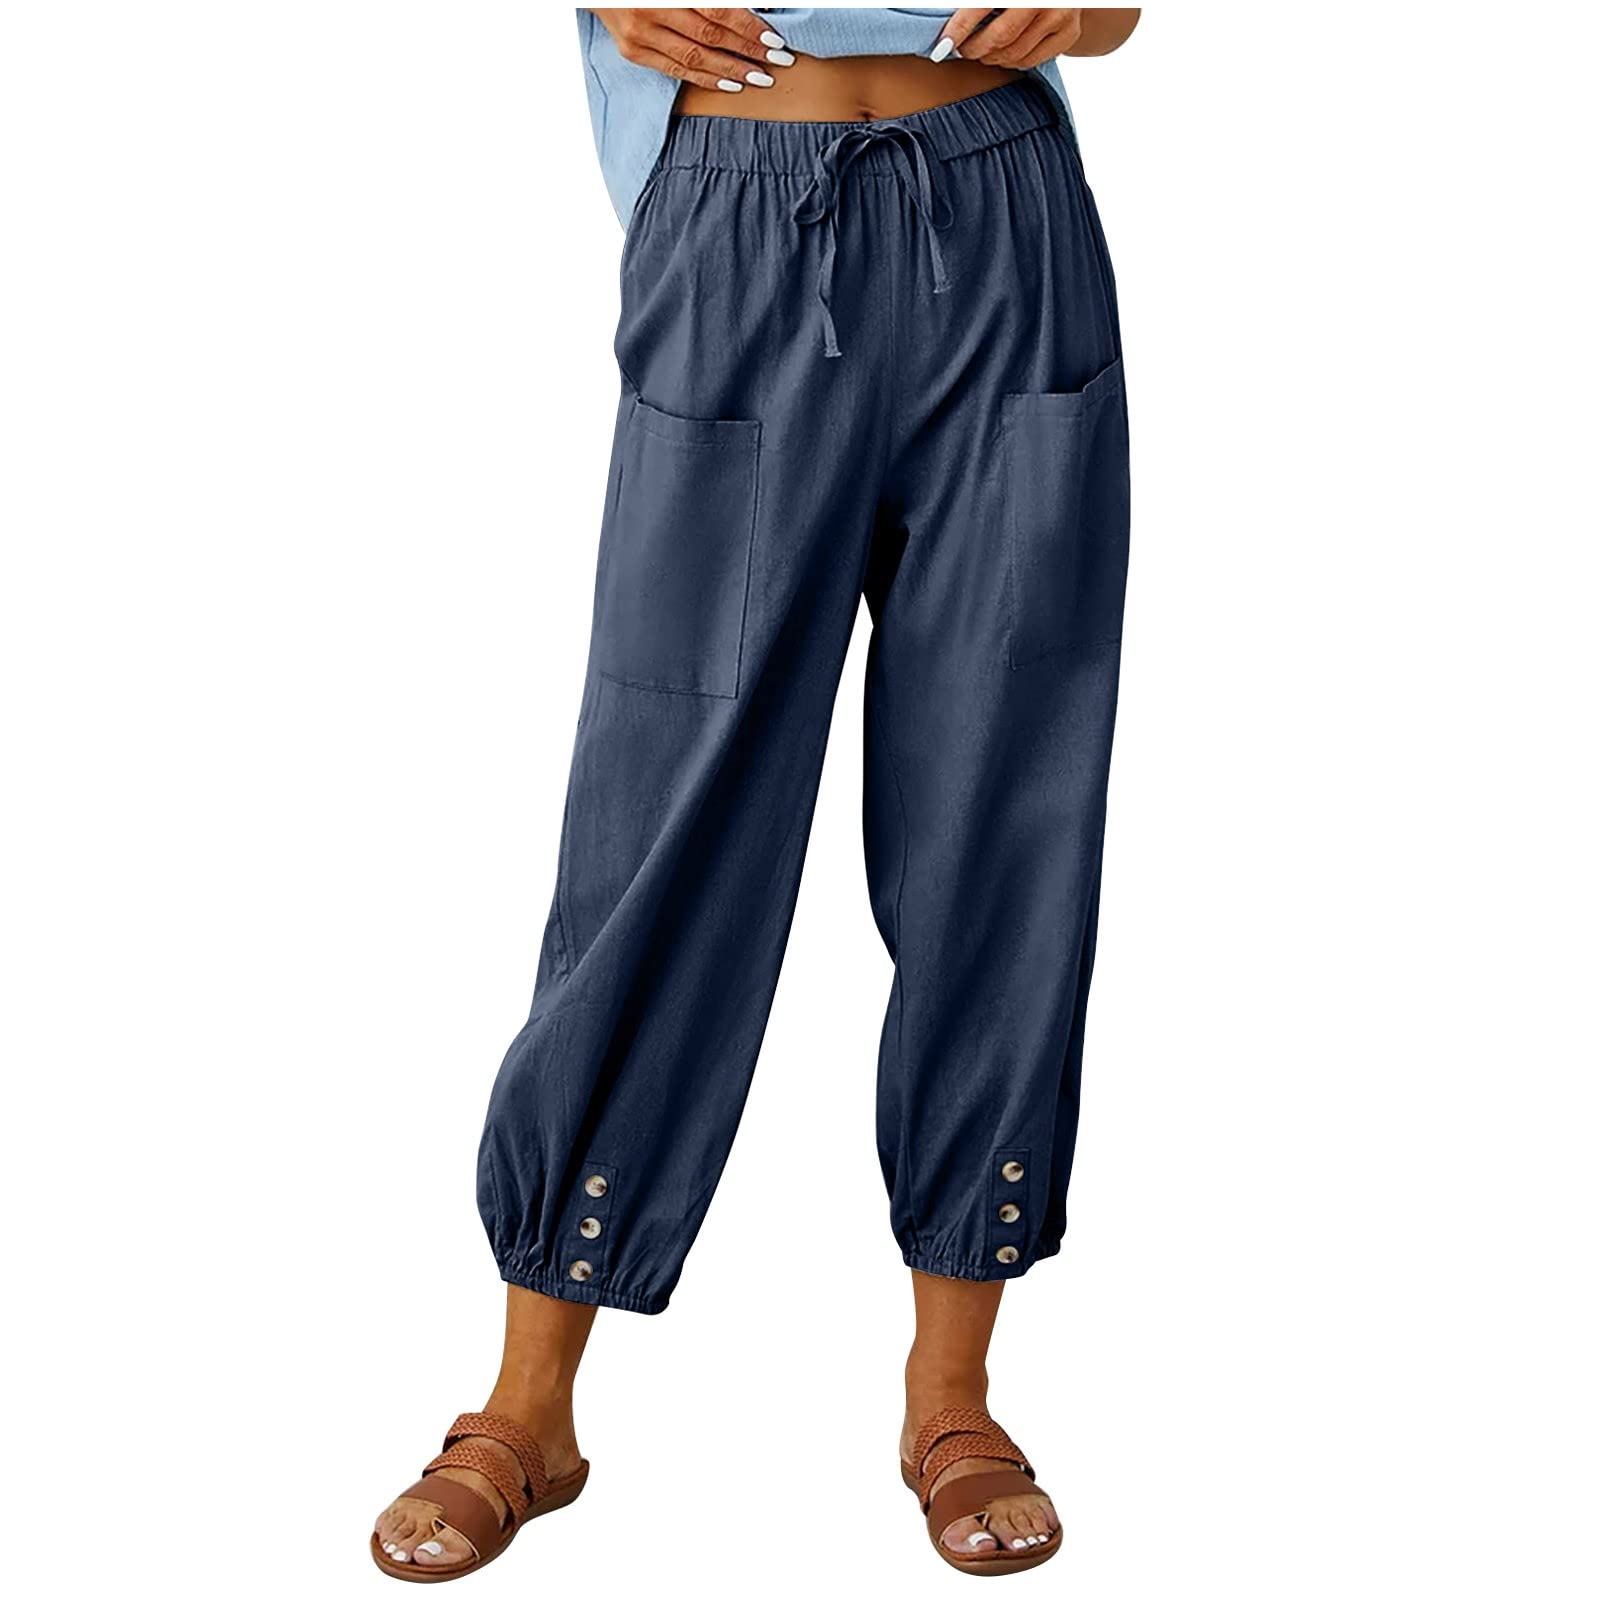 Women Linen Pants Elastic High Waist Wide Leg Palazzo Lounge Pants Casual  Loose Beach Pants with Pockets 